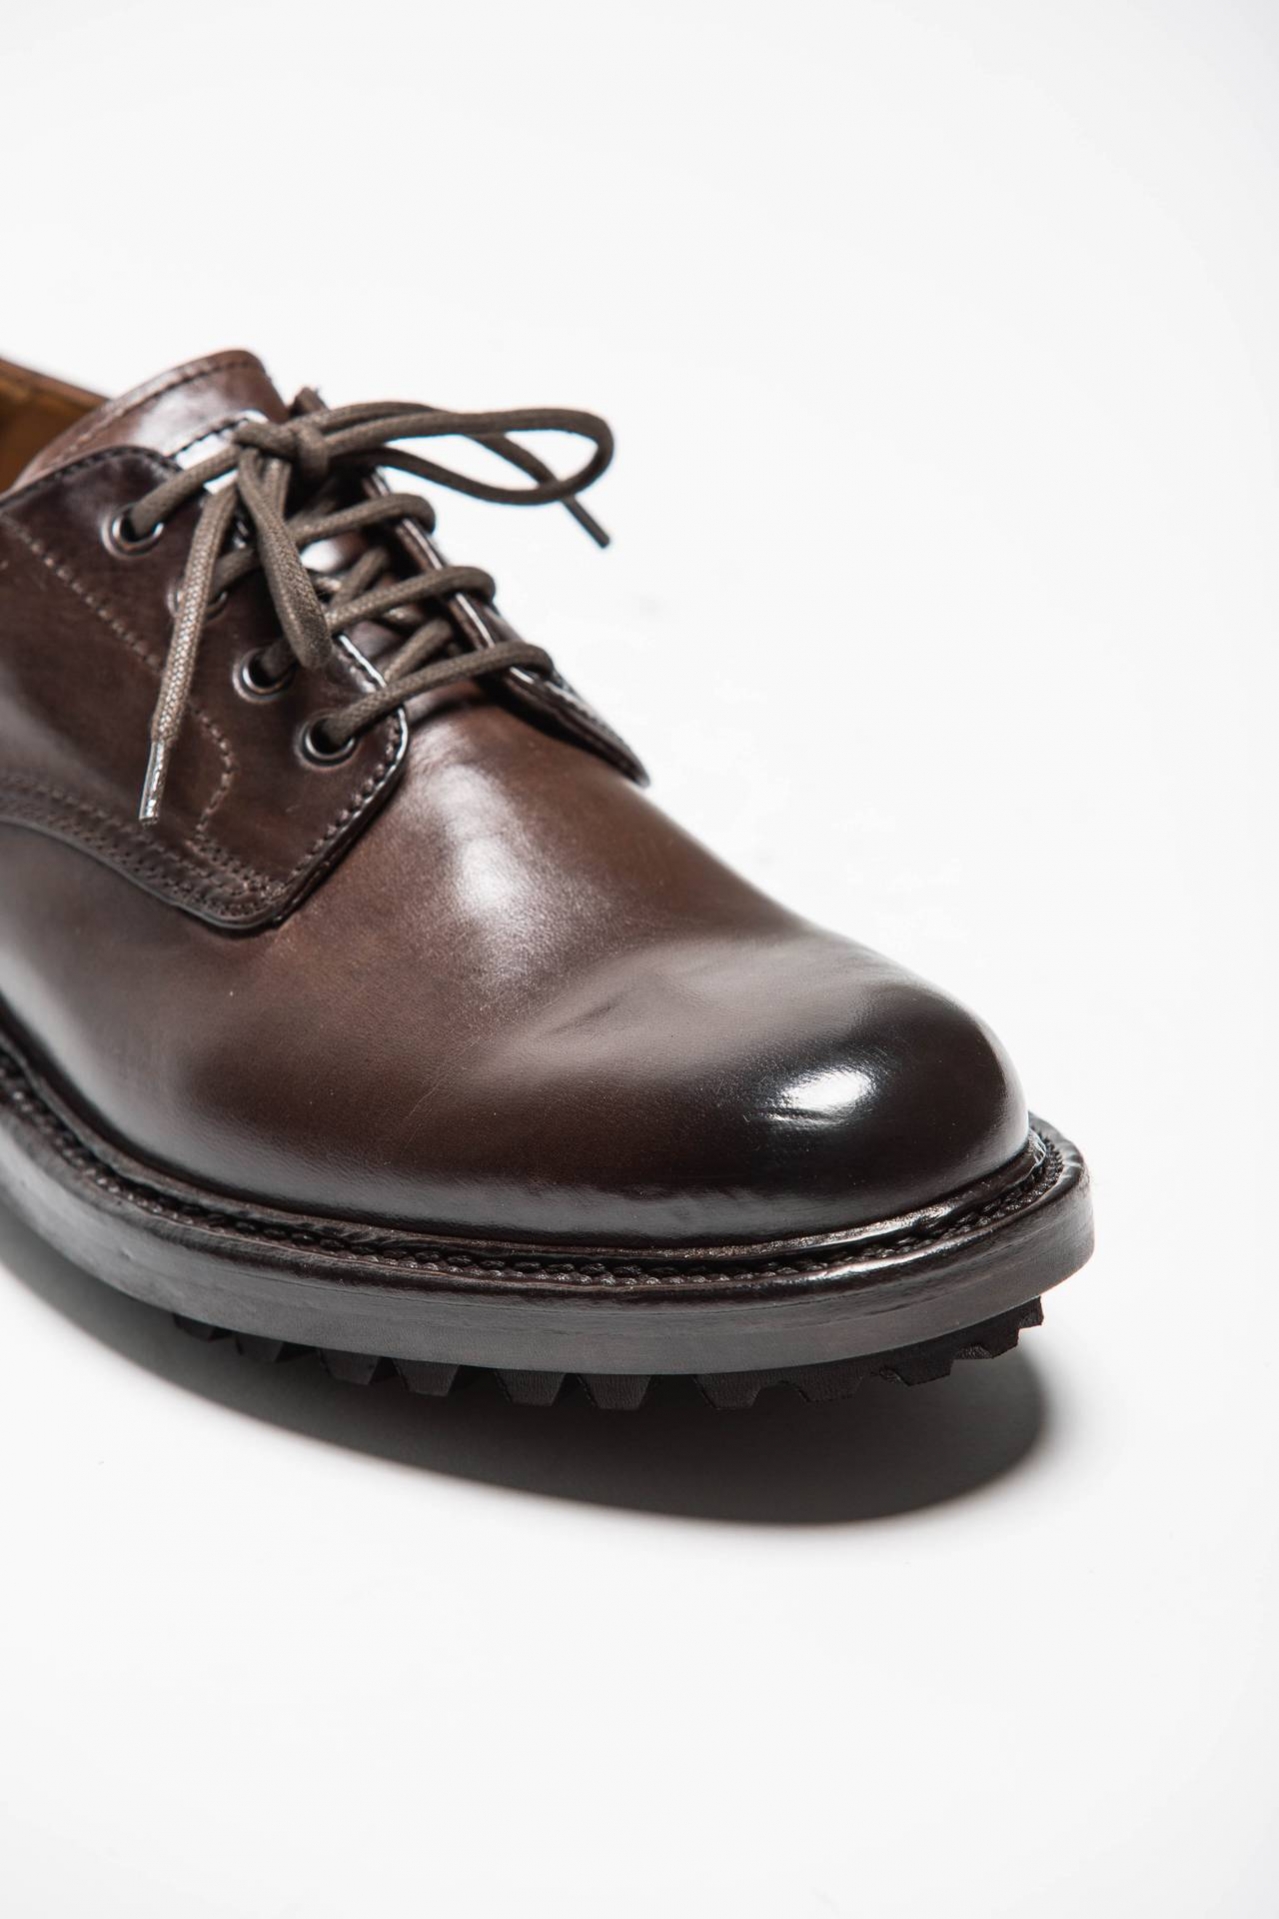 BRISTOL/001 leather shoes